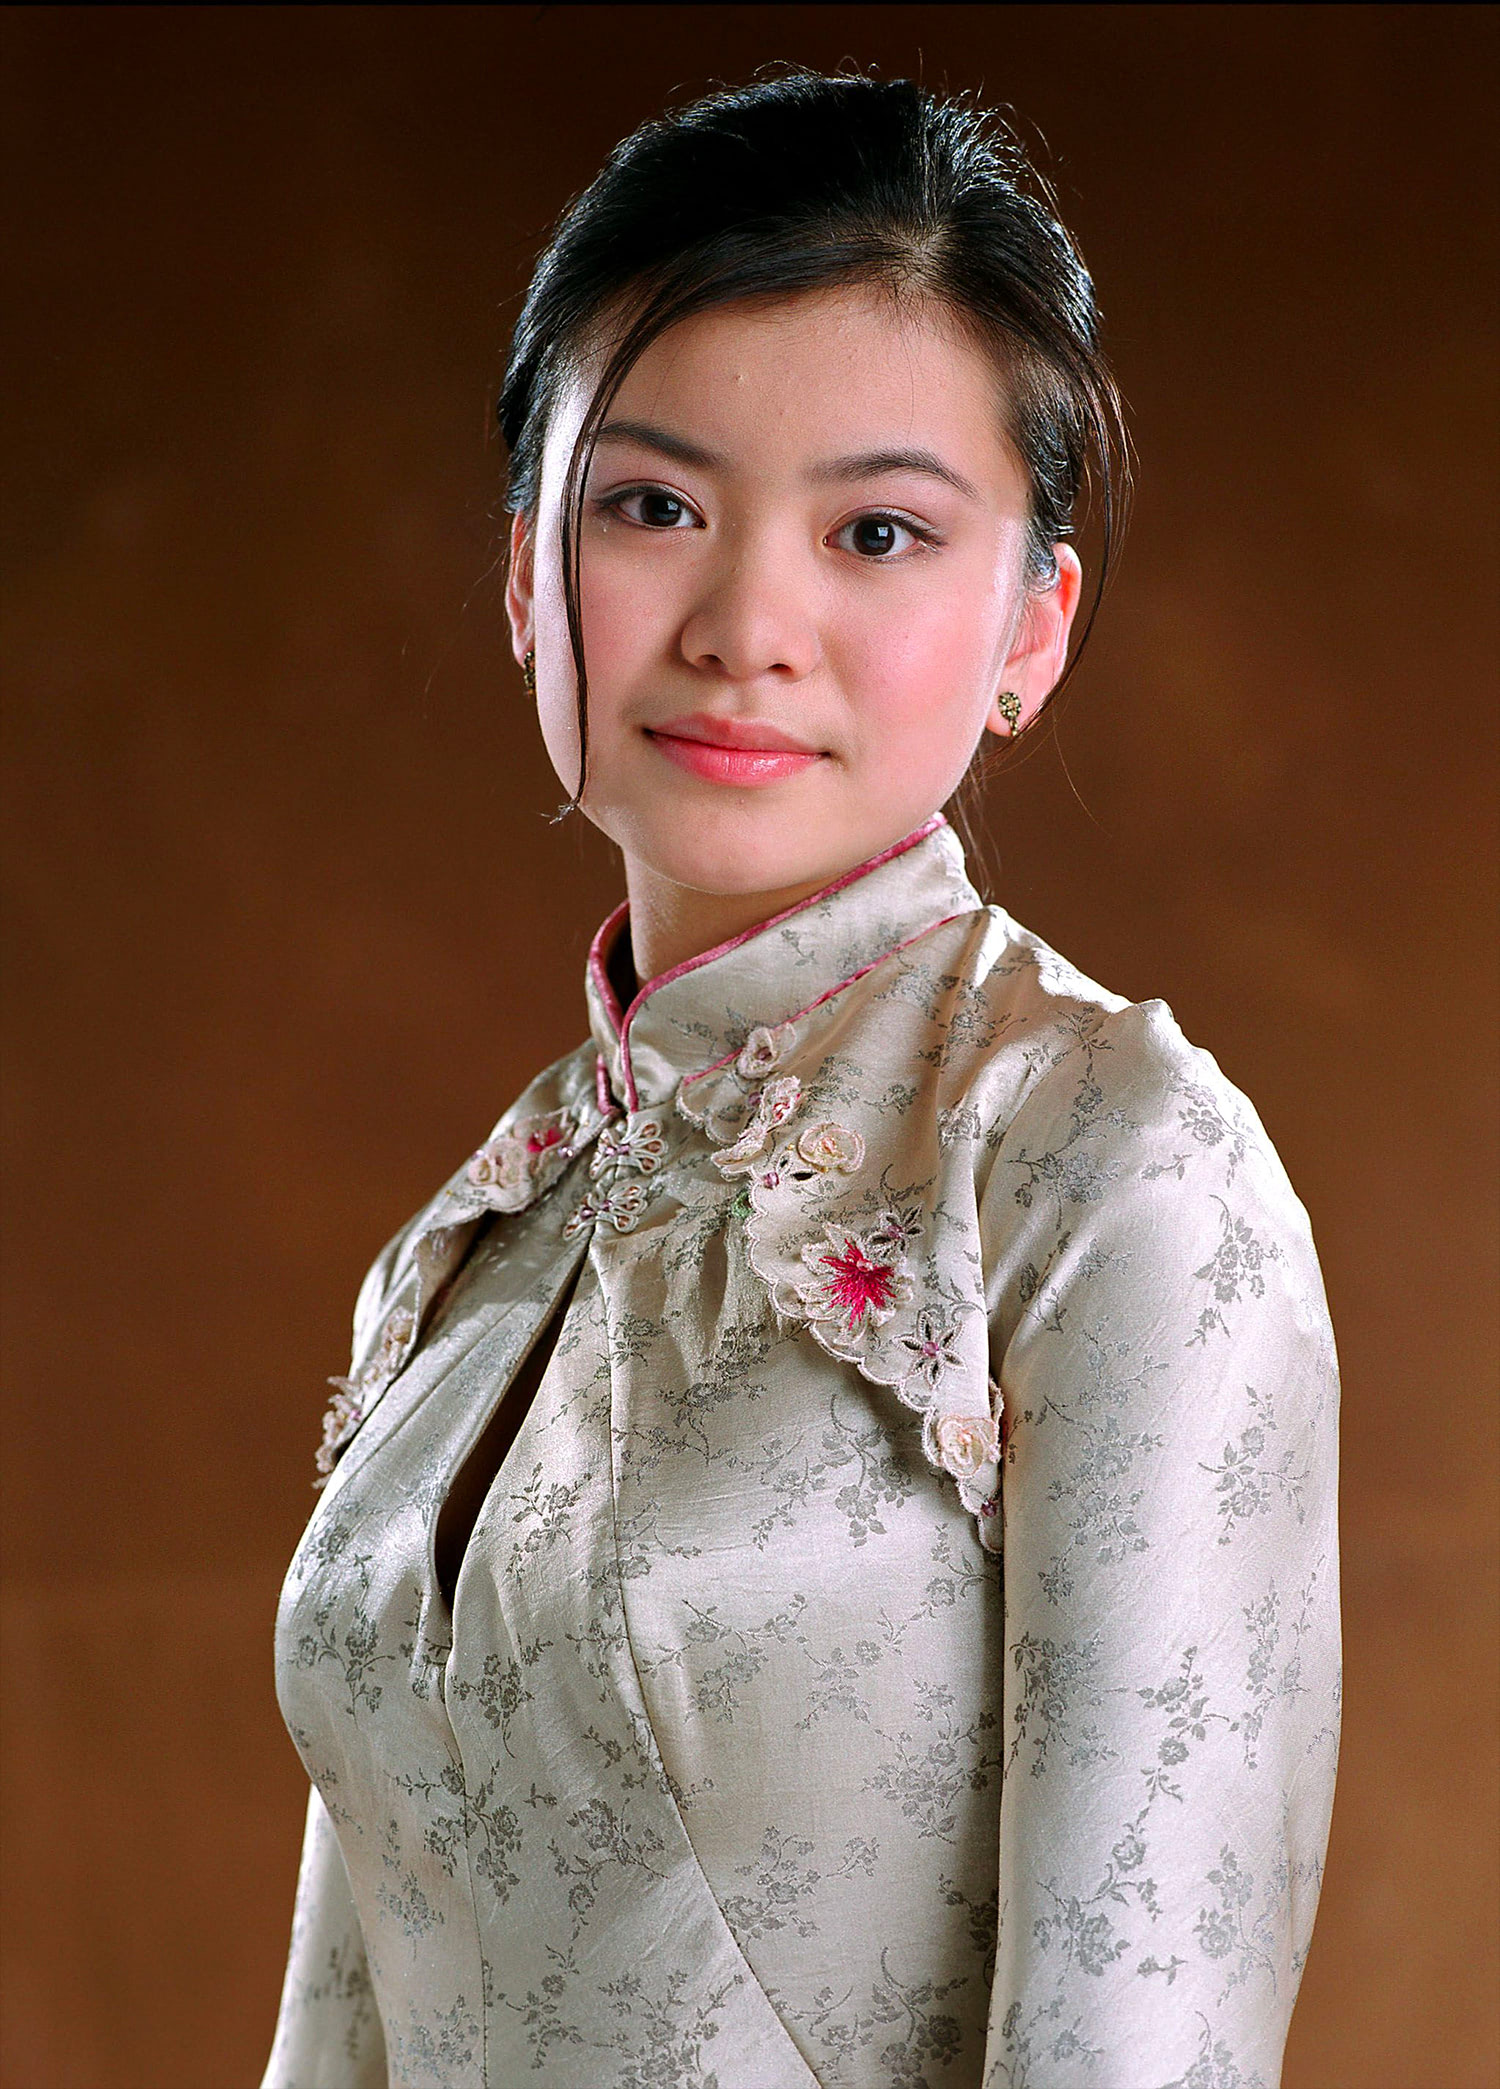 Cho Chang Yule Ball portrait